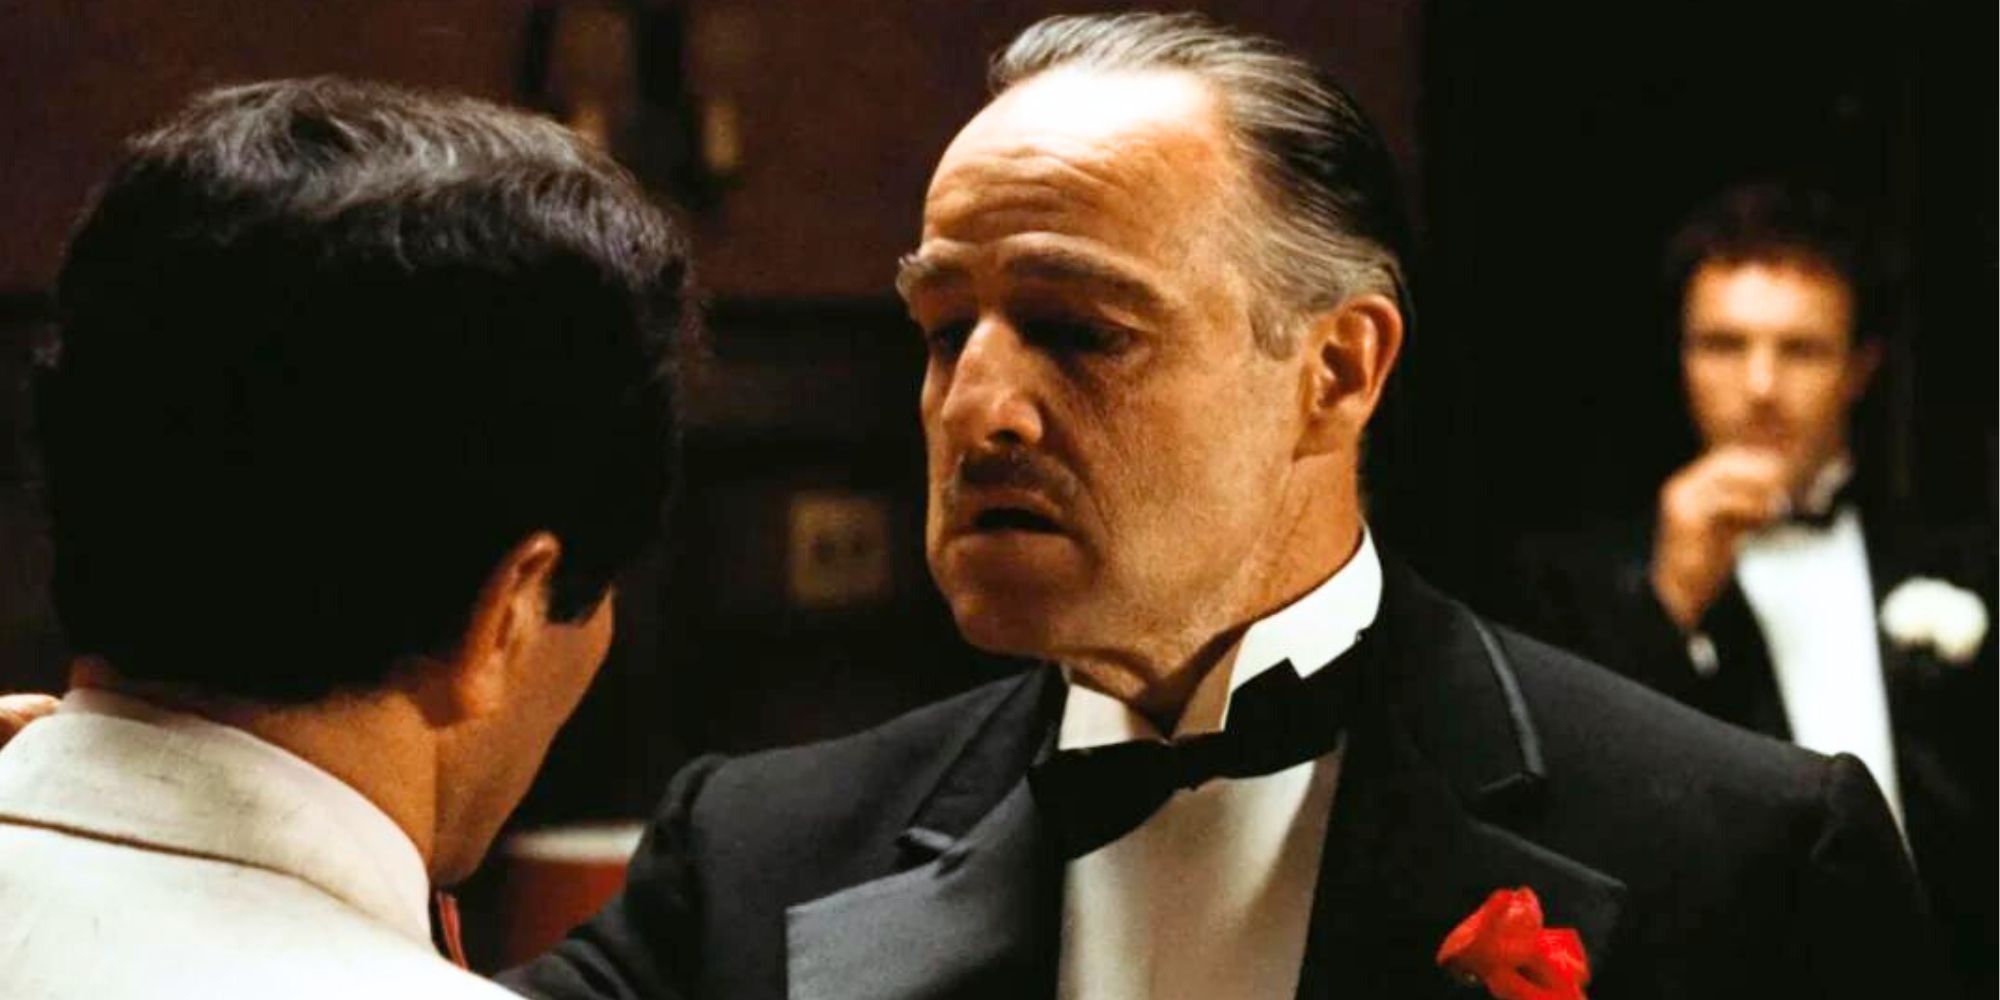 Marlon Brando speaking to someone in The Godfather (1972)